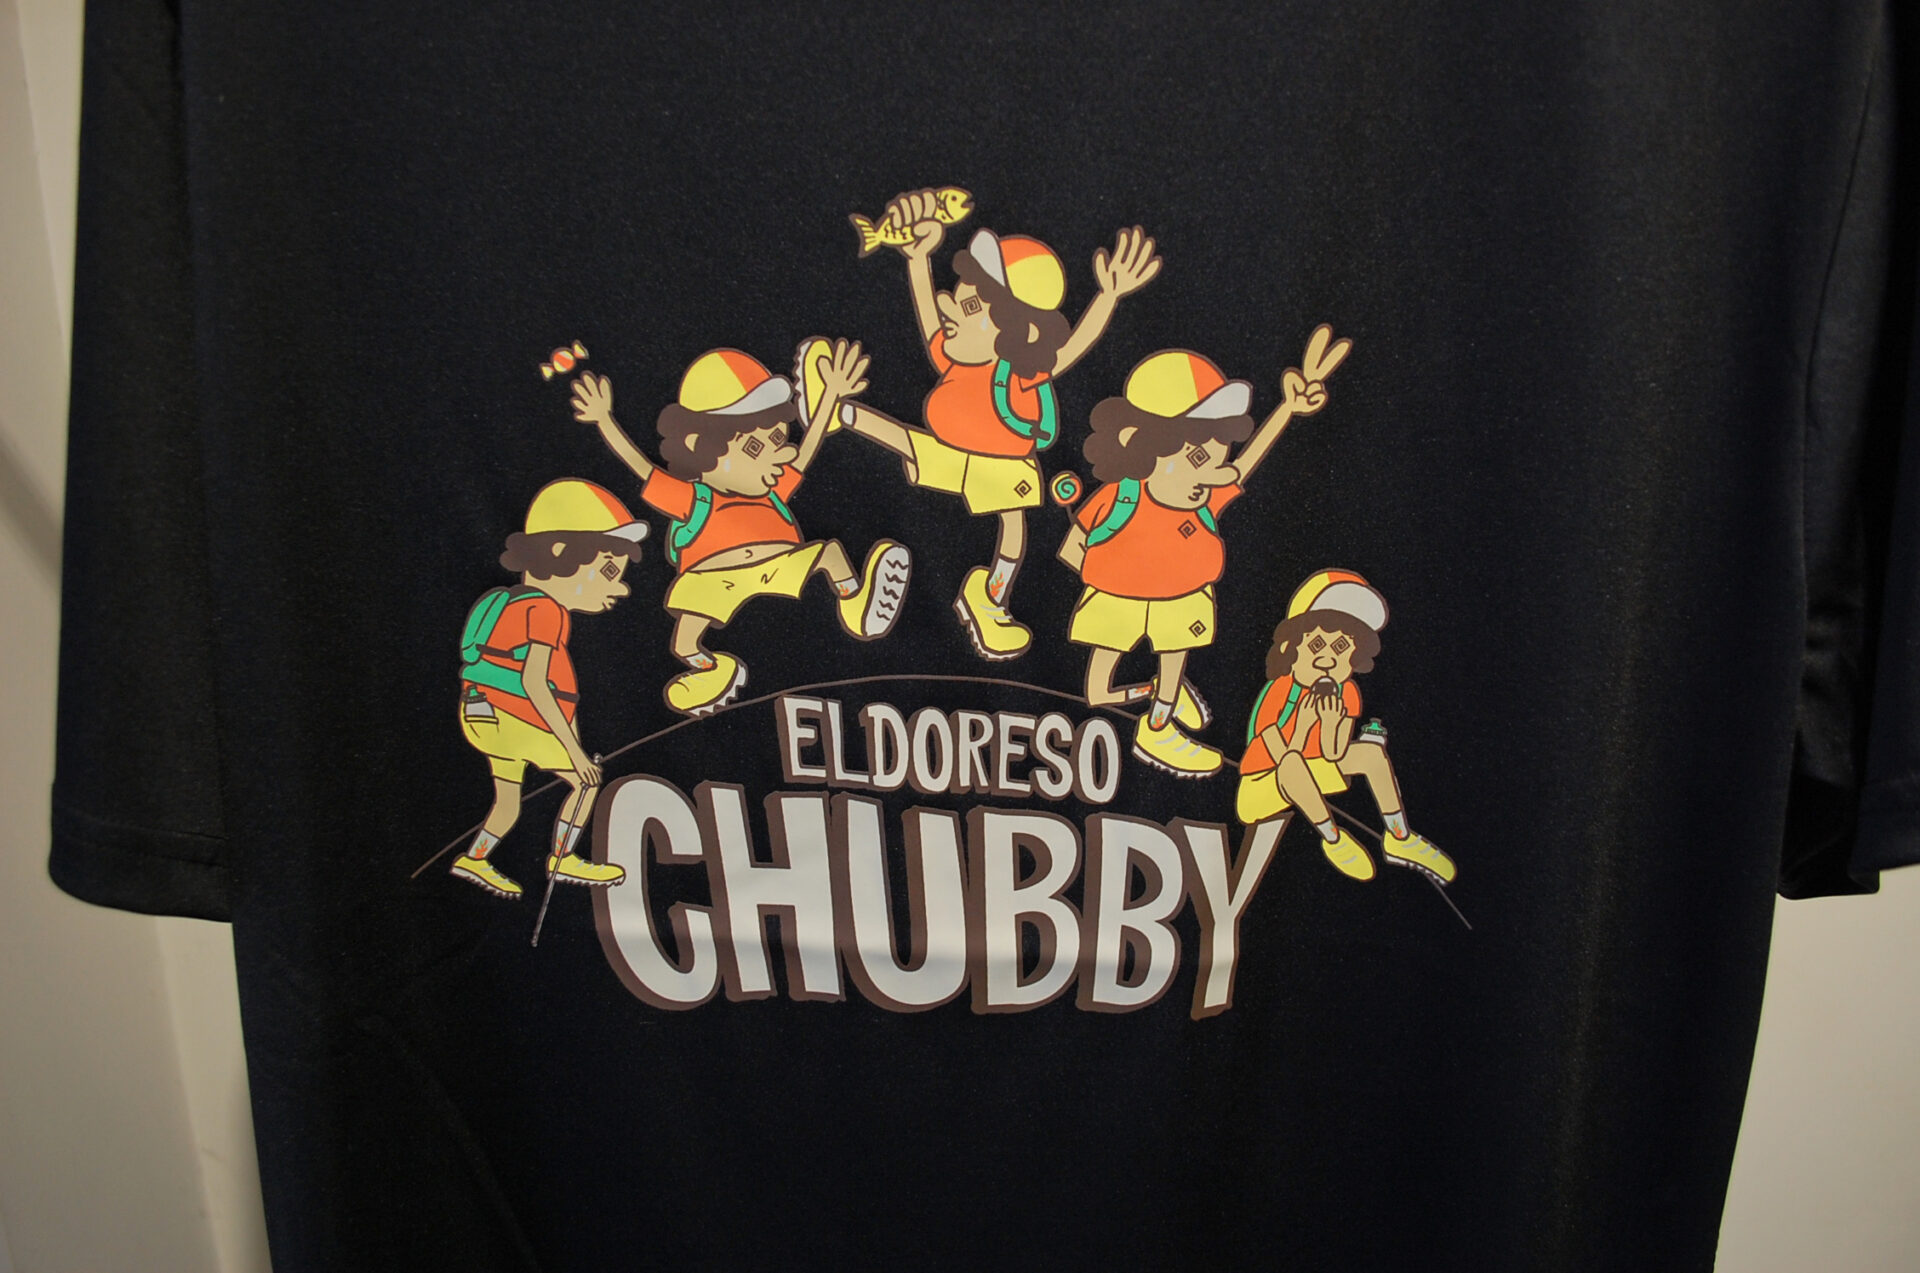 ELDORESO(エルドレッソ) Chubby T (E1006921) | circle AOMORI